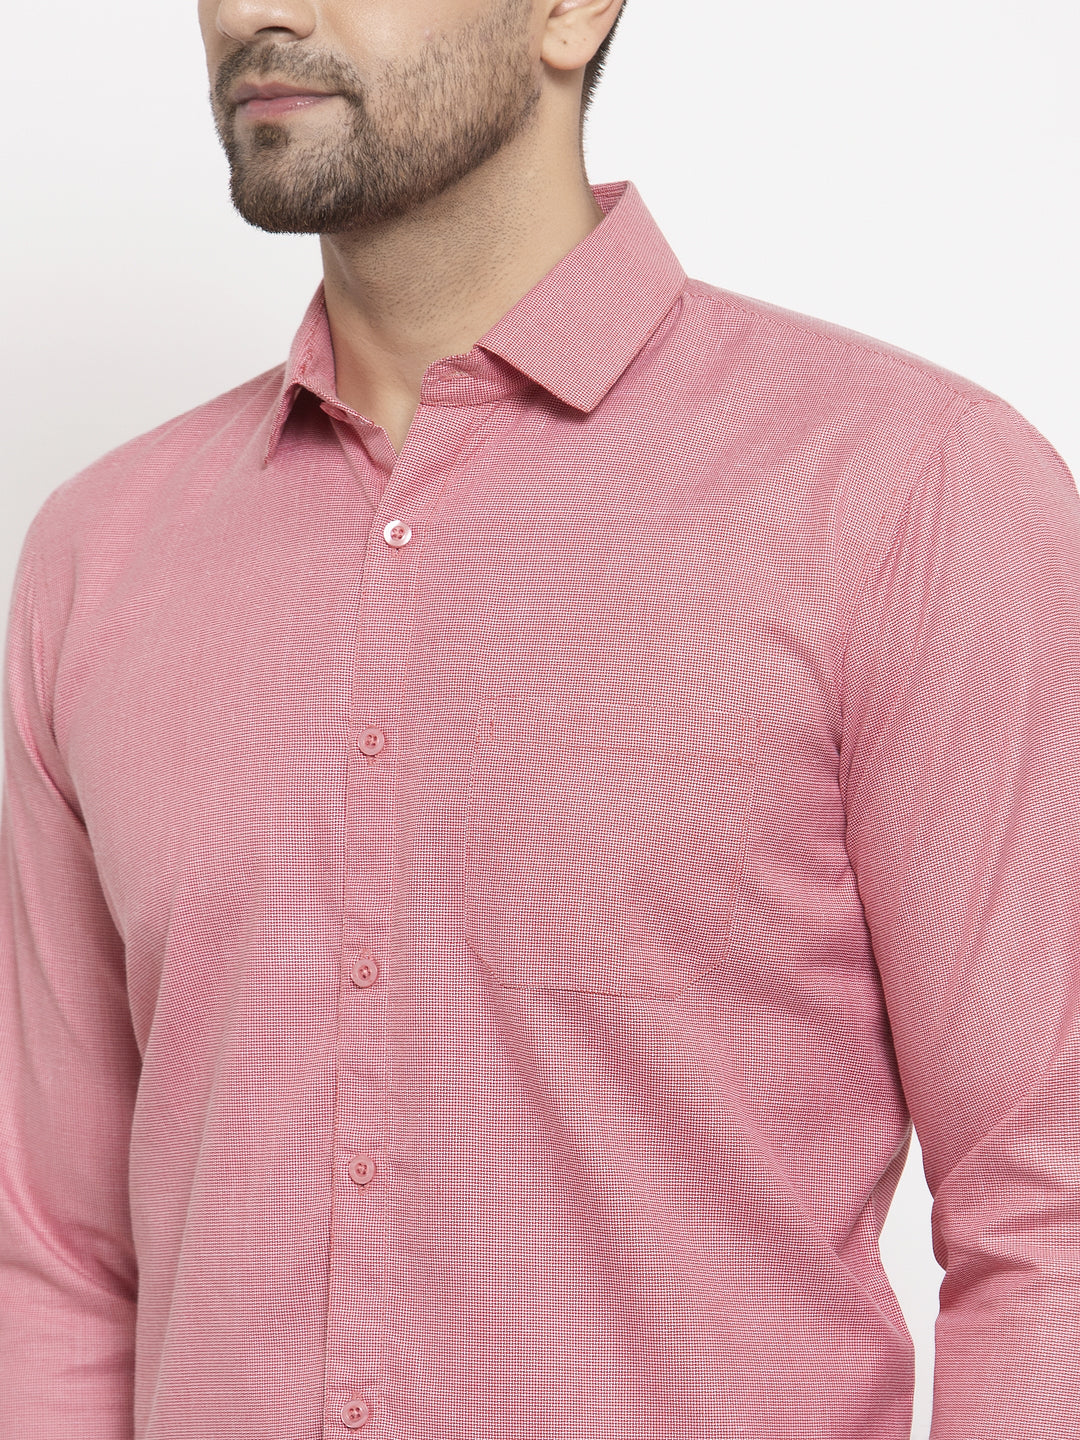 Men's Red Cotton Geometric Formal Shirts ( SF 434Red ) - Jainish